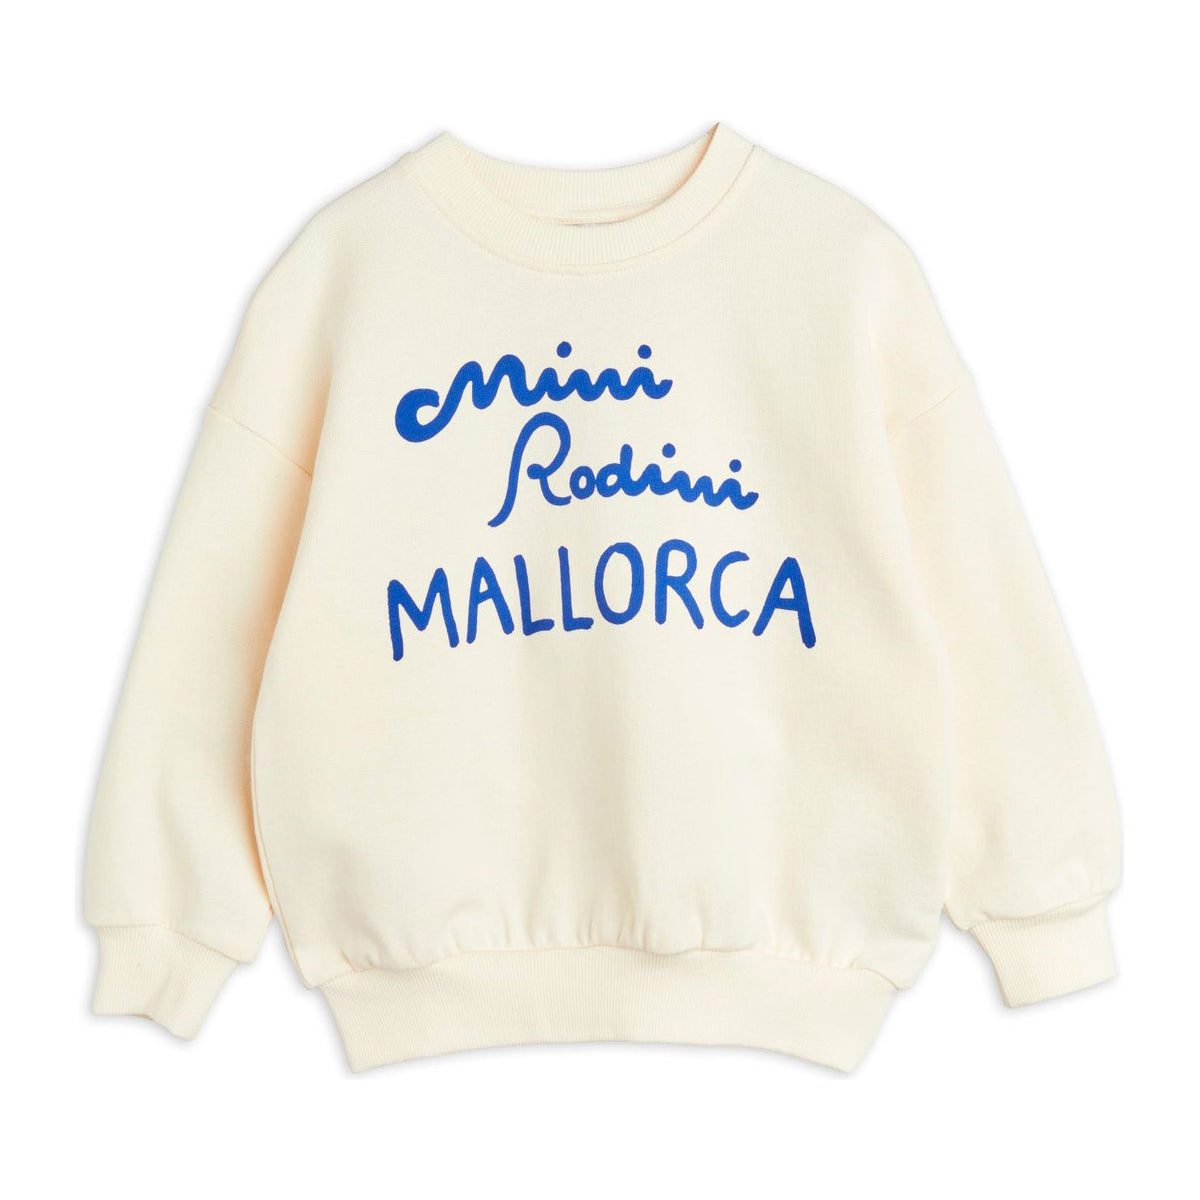 Mallorca Sp Sweatshirt